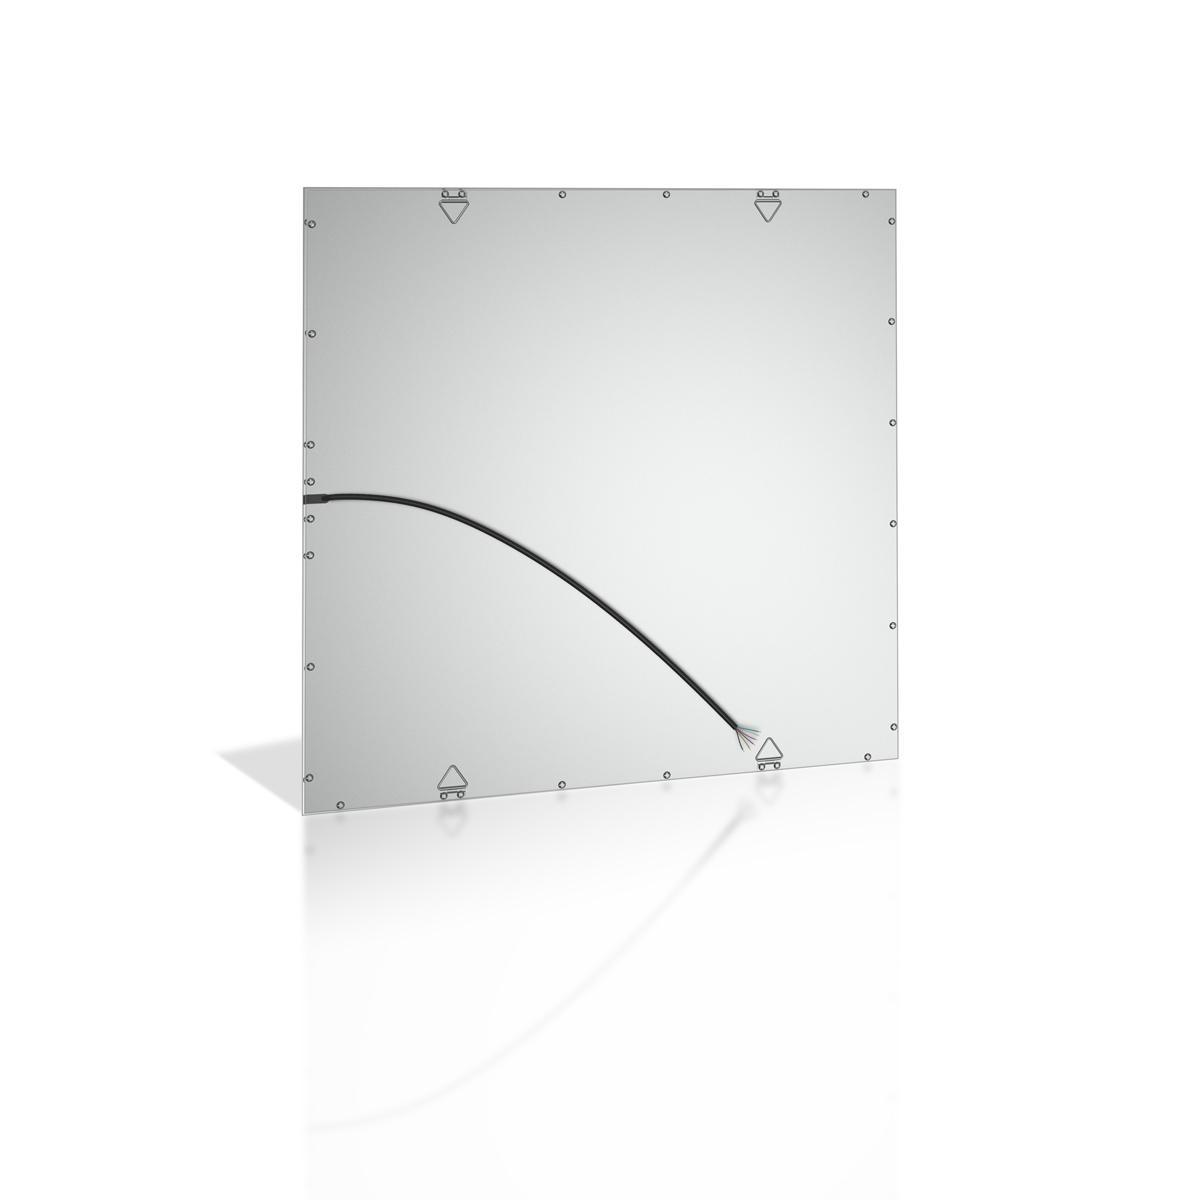 RGB+CCT LED Panel 62x62cm inkl. MiBoxer Smarthomesteuerung 48W 24V Rahmen weiß - Panelmontage: Seilabhängung 1 Meter